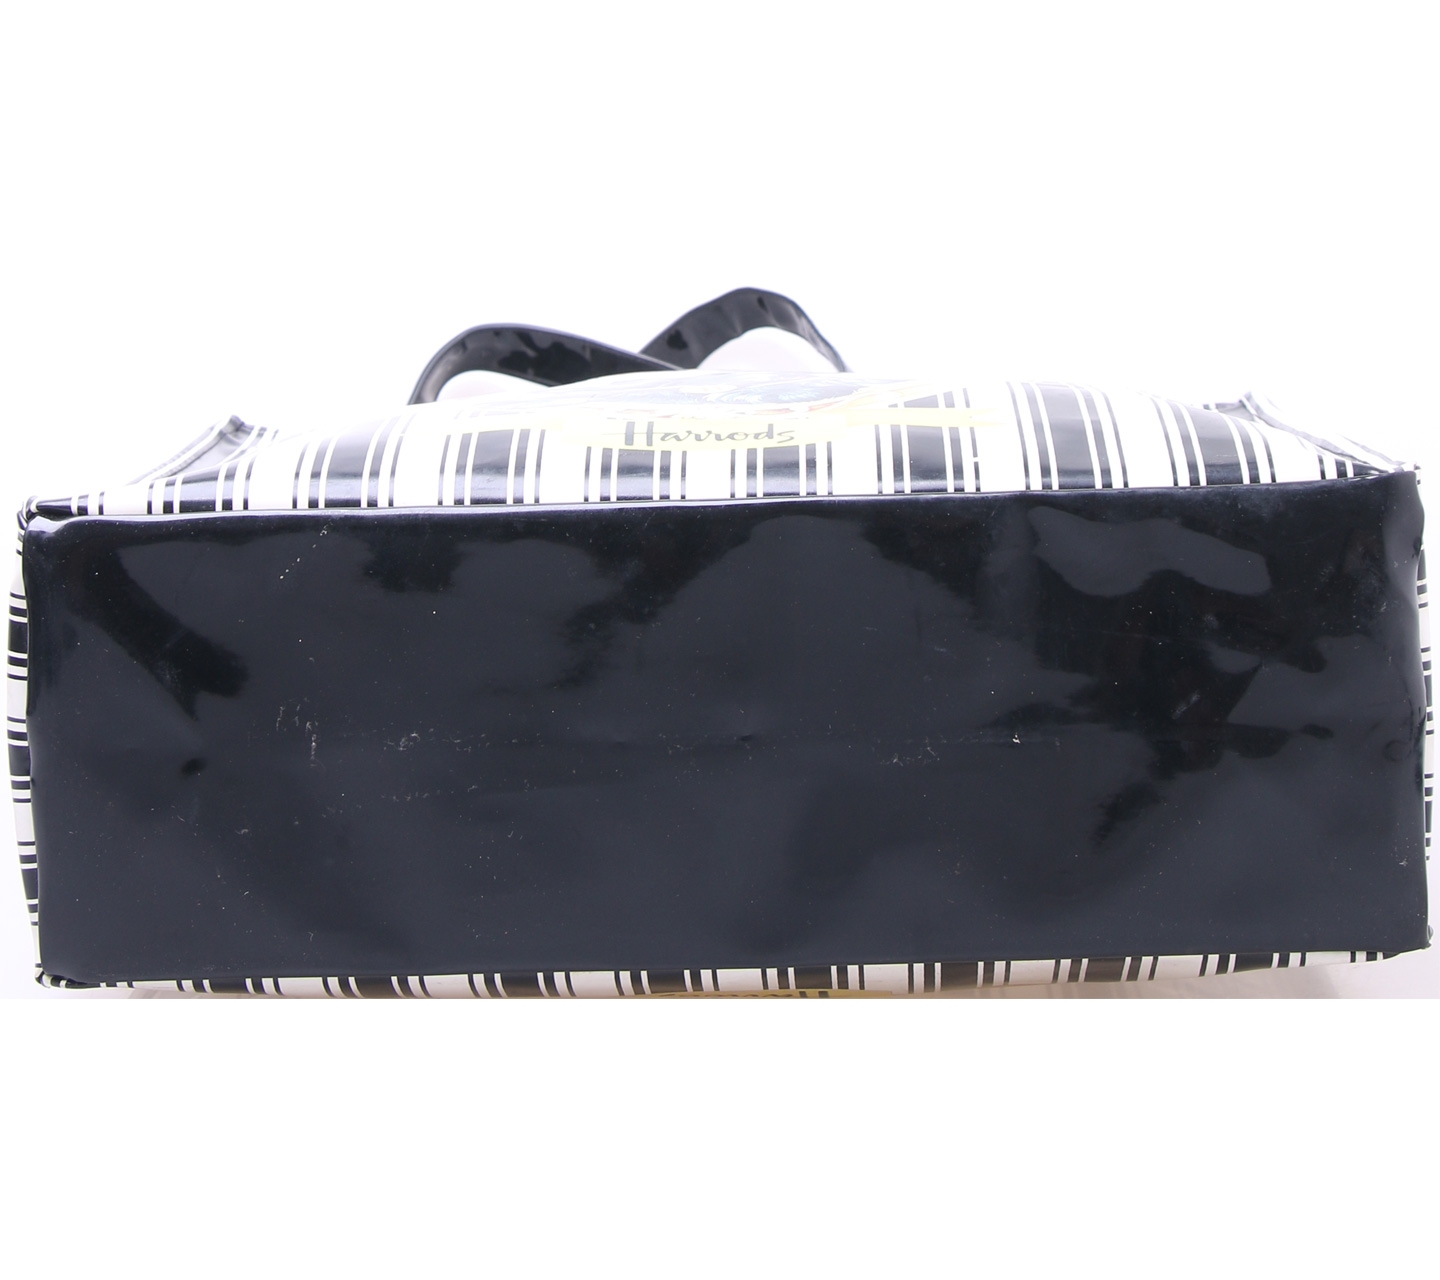 Harrods Black And White Striped Tote Bag